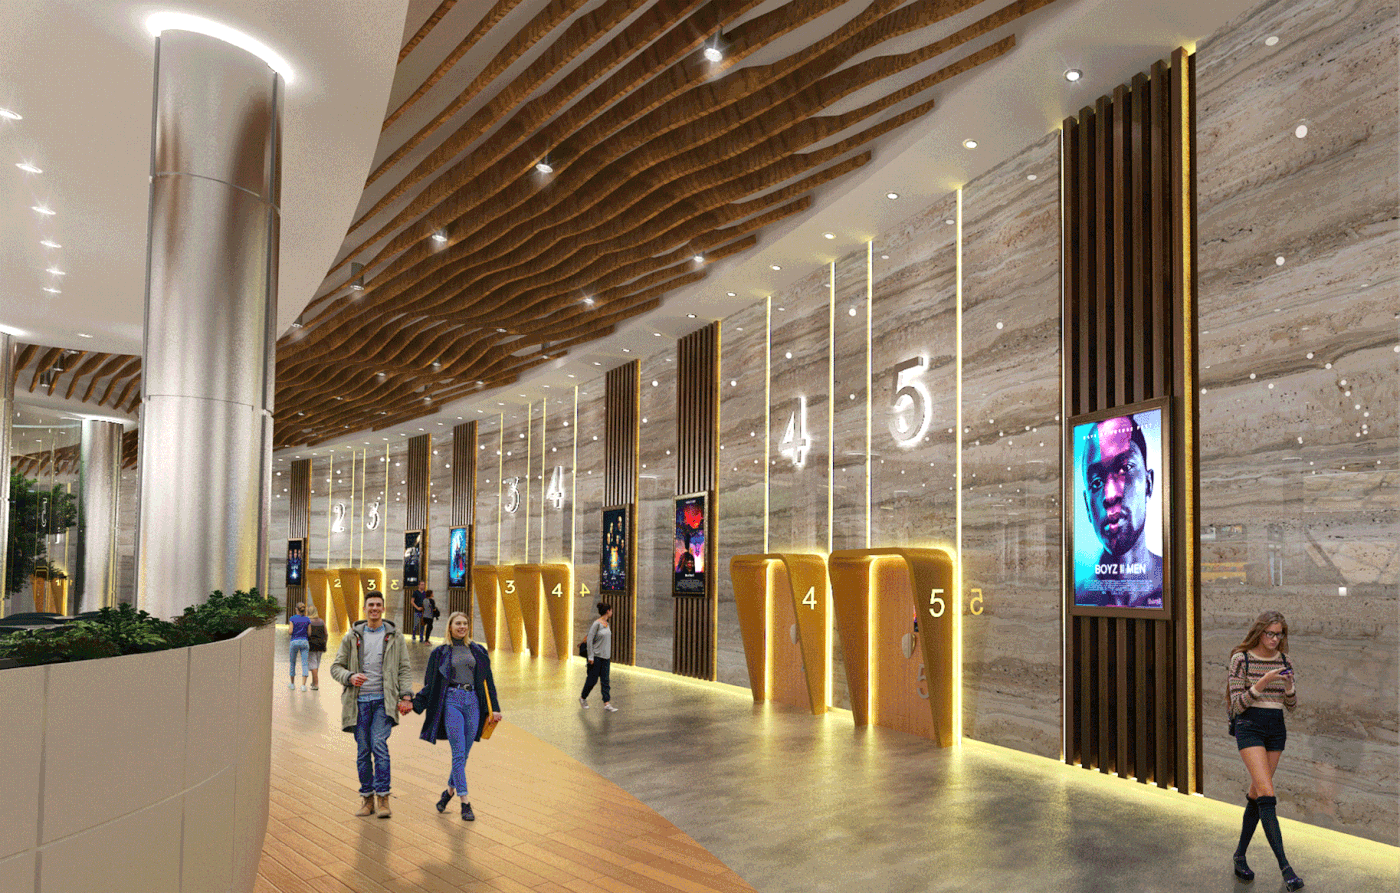 graduation Project Cinema cinema city egypt new capital parametric organic center interior design 